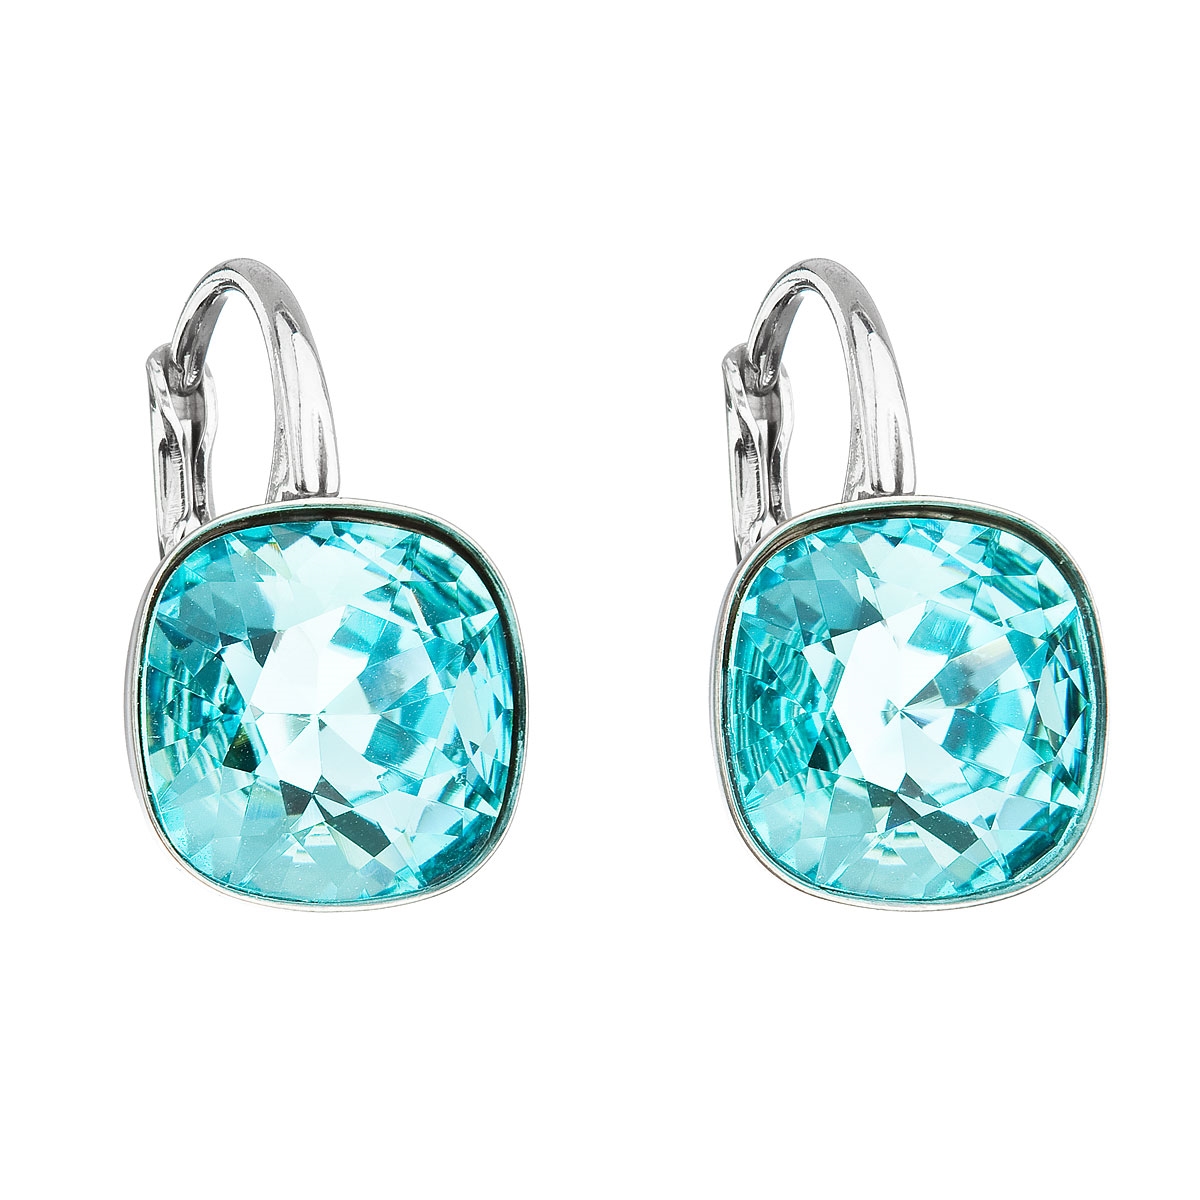 Strieborné náušnice štvorec s kameňmi Crystals from Swarovski ® Light Turquoise